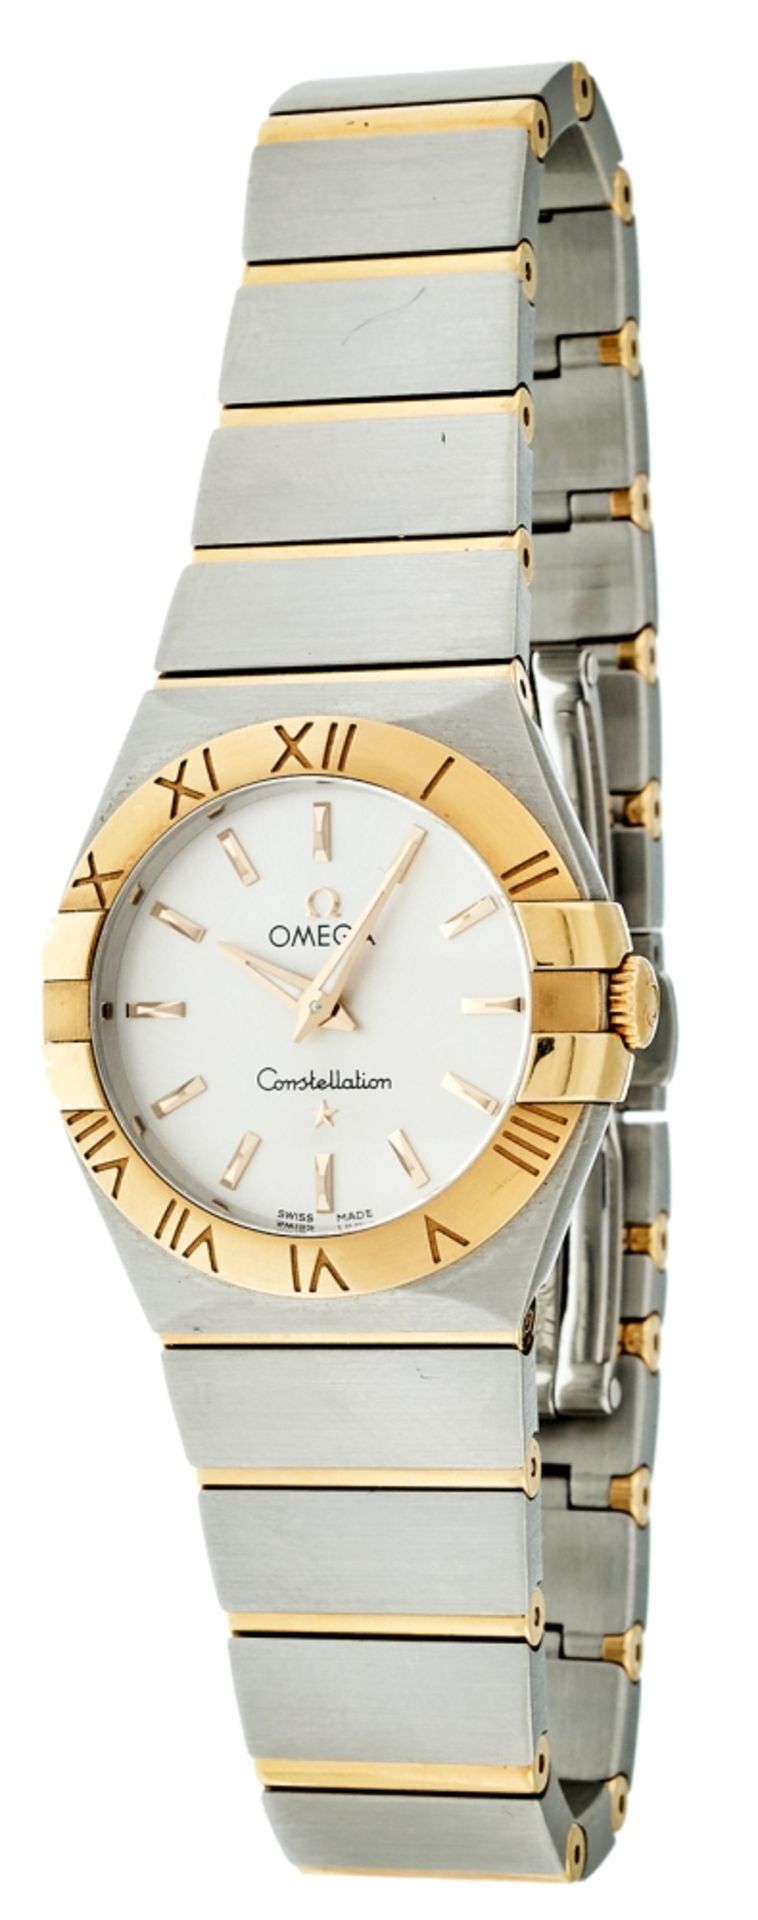 Omega Constellation ladies wrist watch. Ca. 28 mm, high-grade steel, anti-reflection coated sapphire